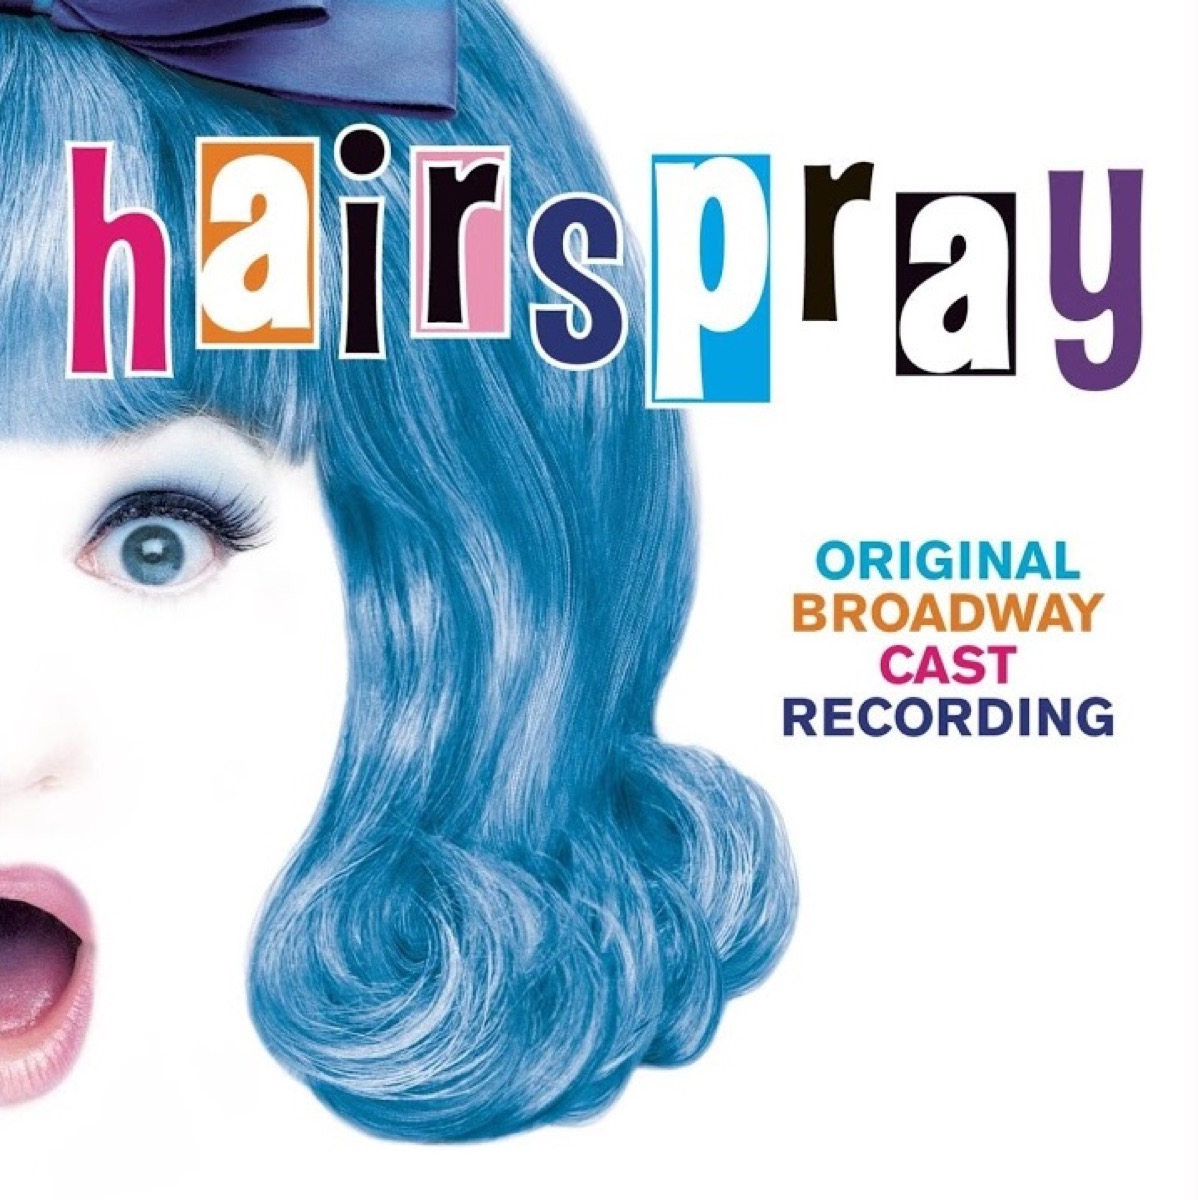 Hairspray cast recording